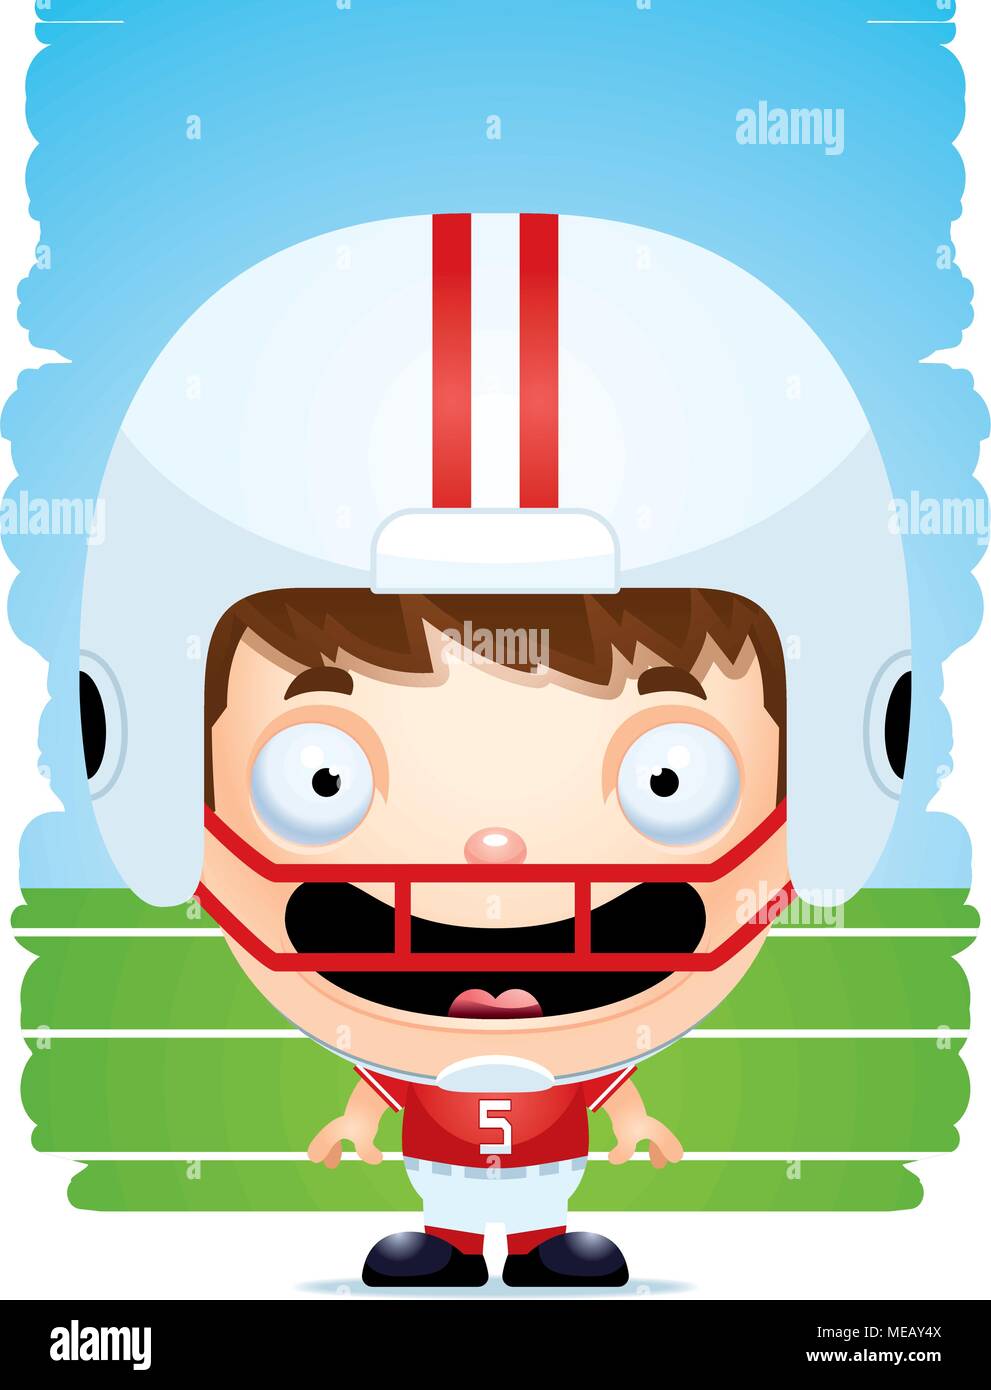 A cartoon illustration of a boy football player smiling. Stock Vector